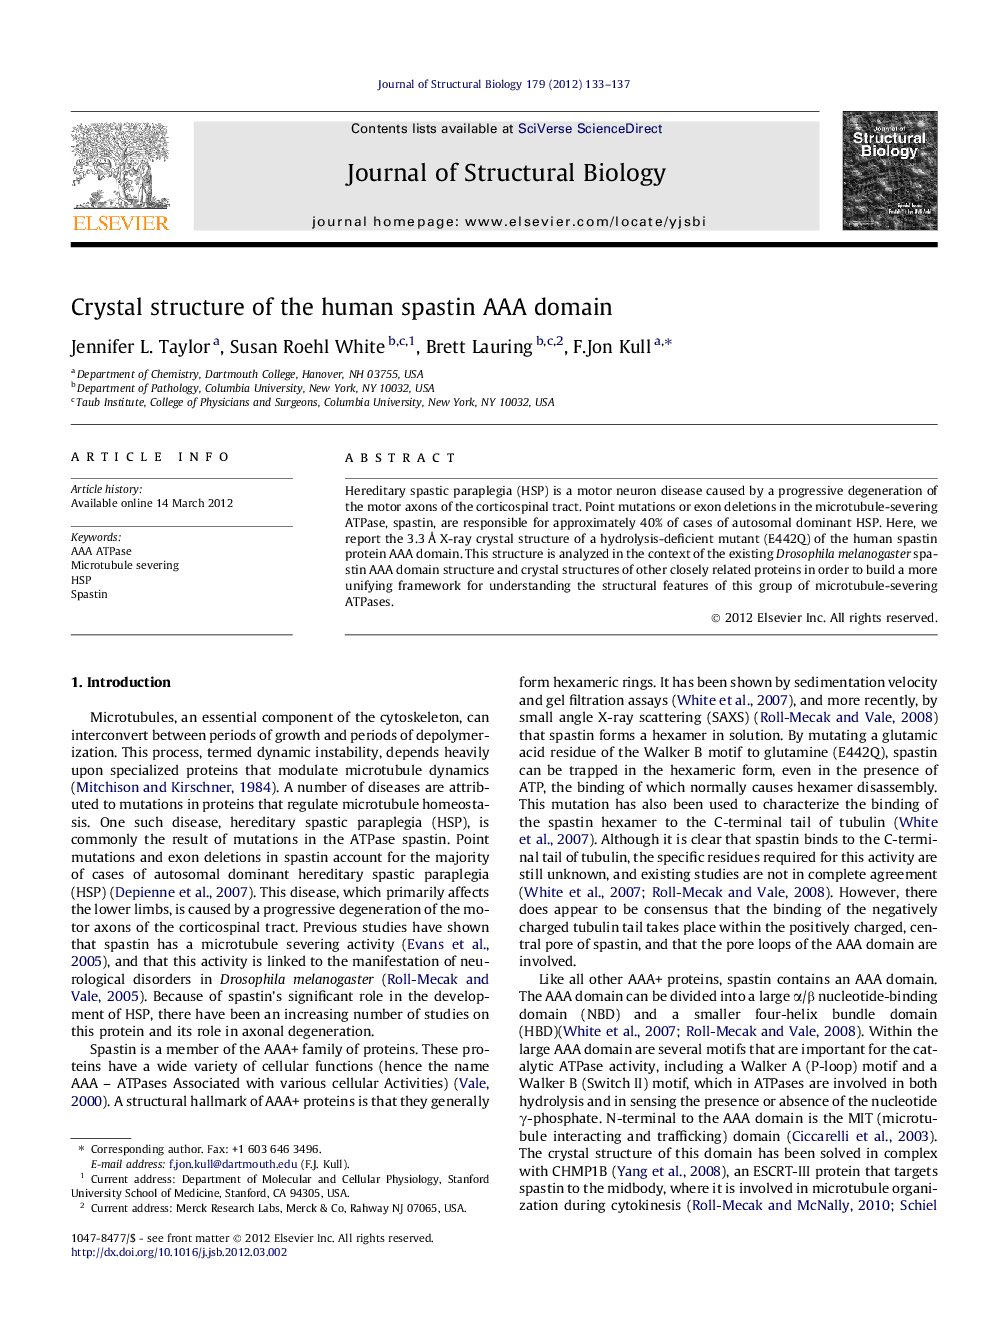 Crystal structure of the human spastin AAA domain